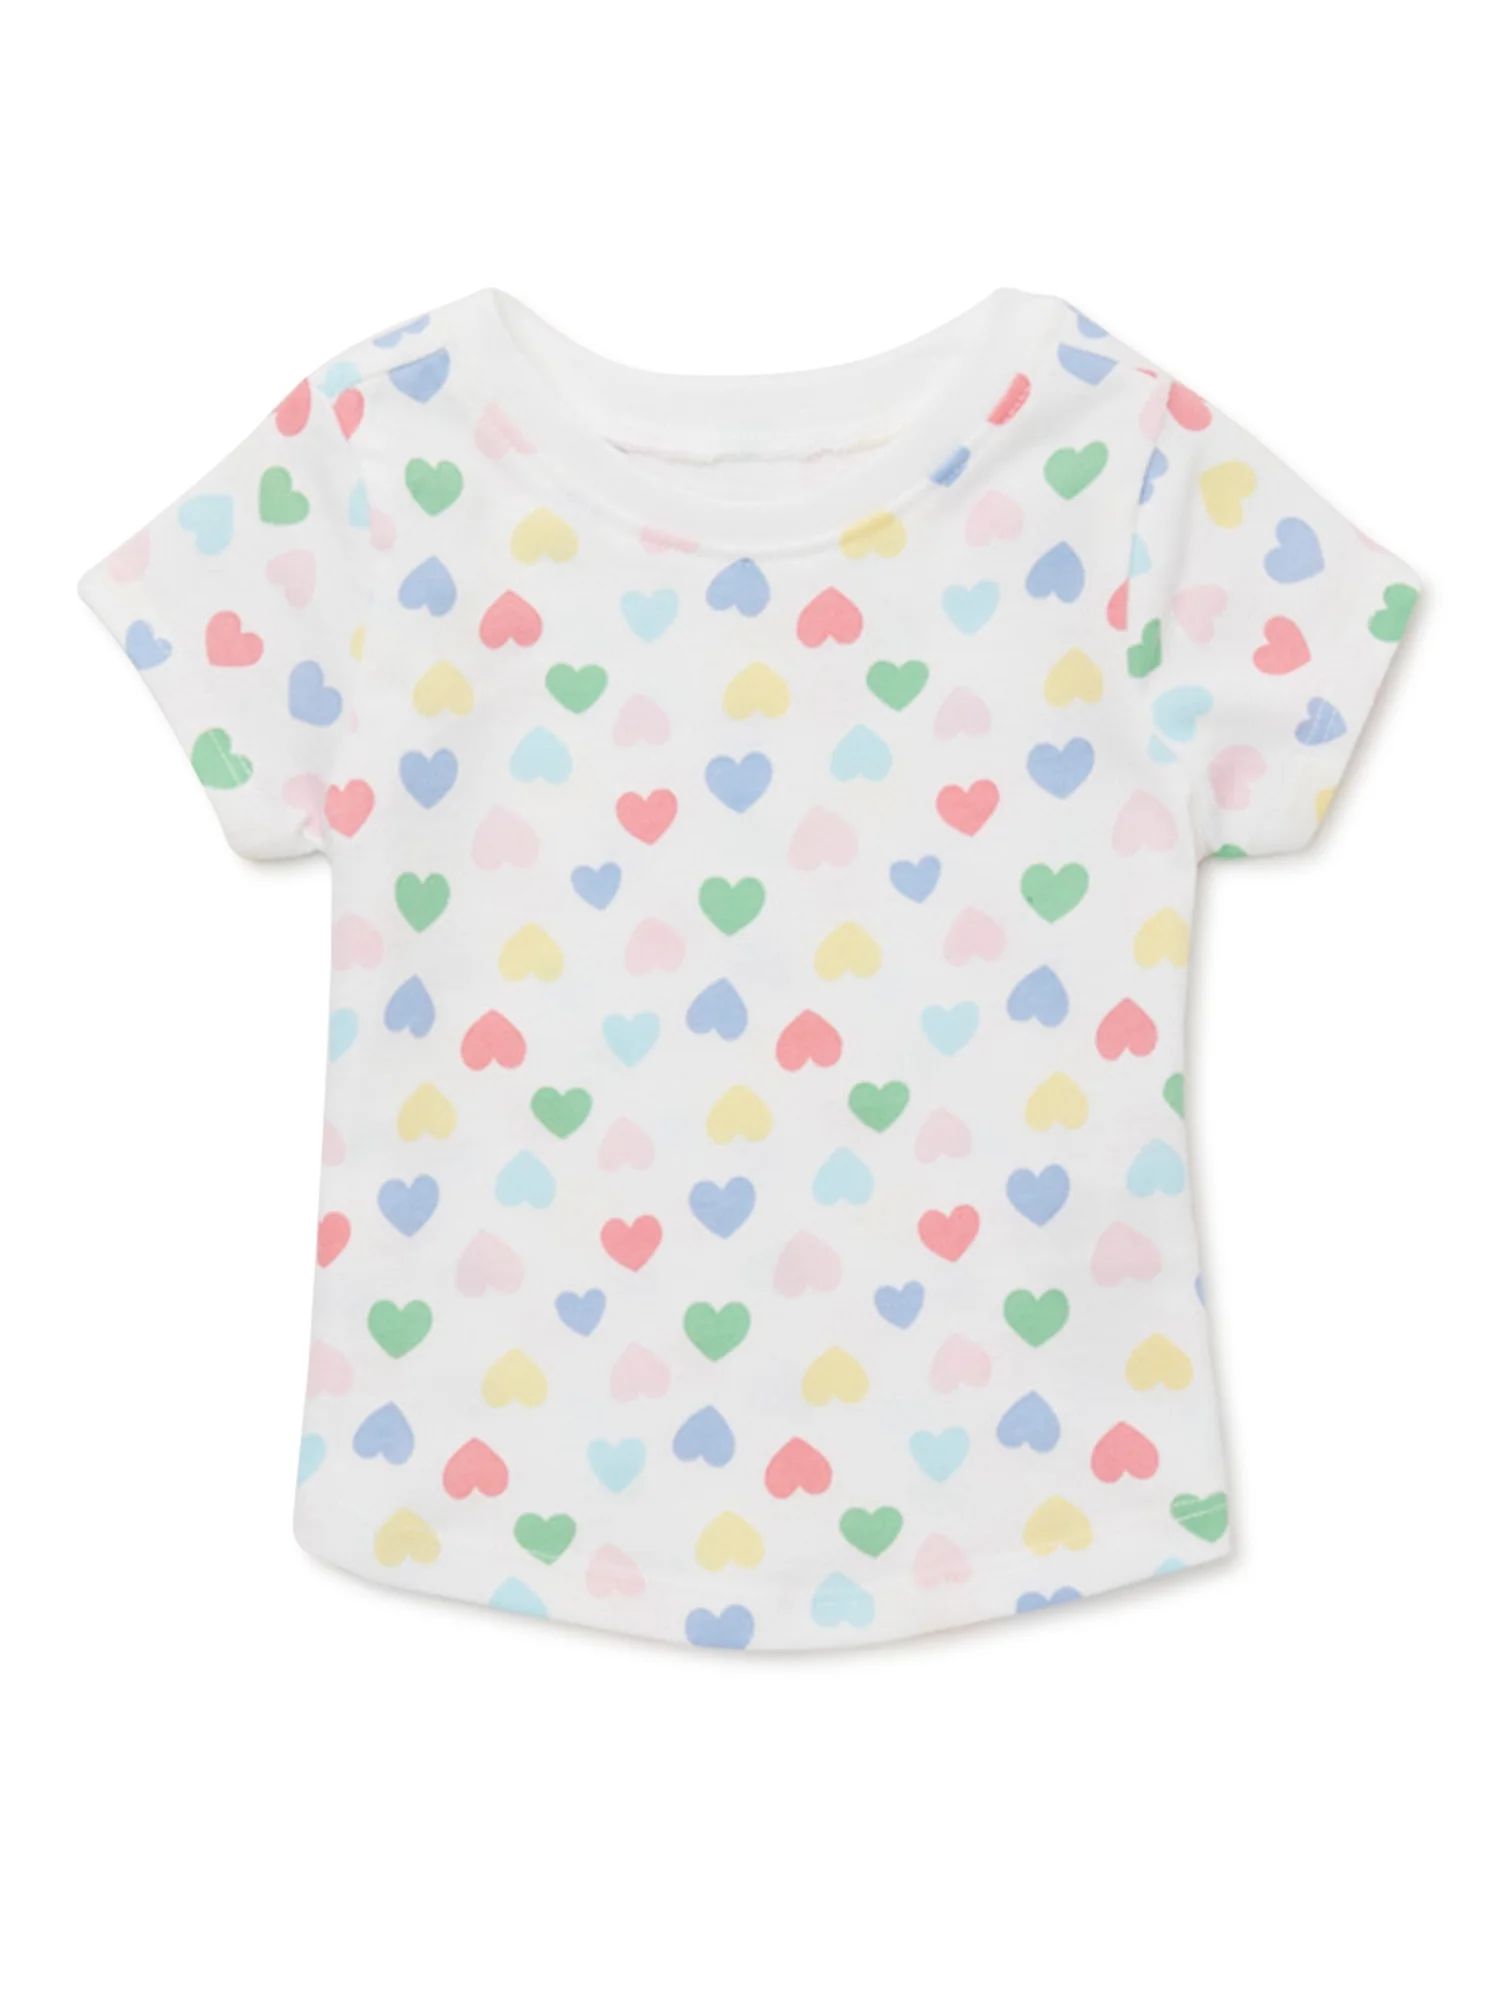 Garanimals Baby Girls Print Tee with Short Sleeves, Sizes 0M-24M | Walmart (US)